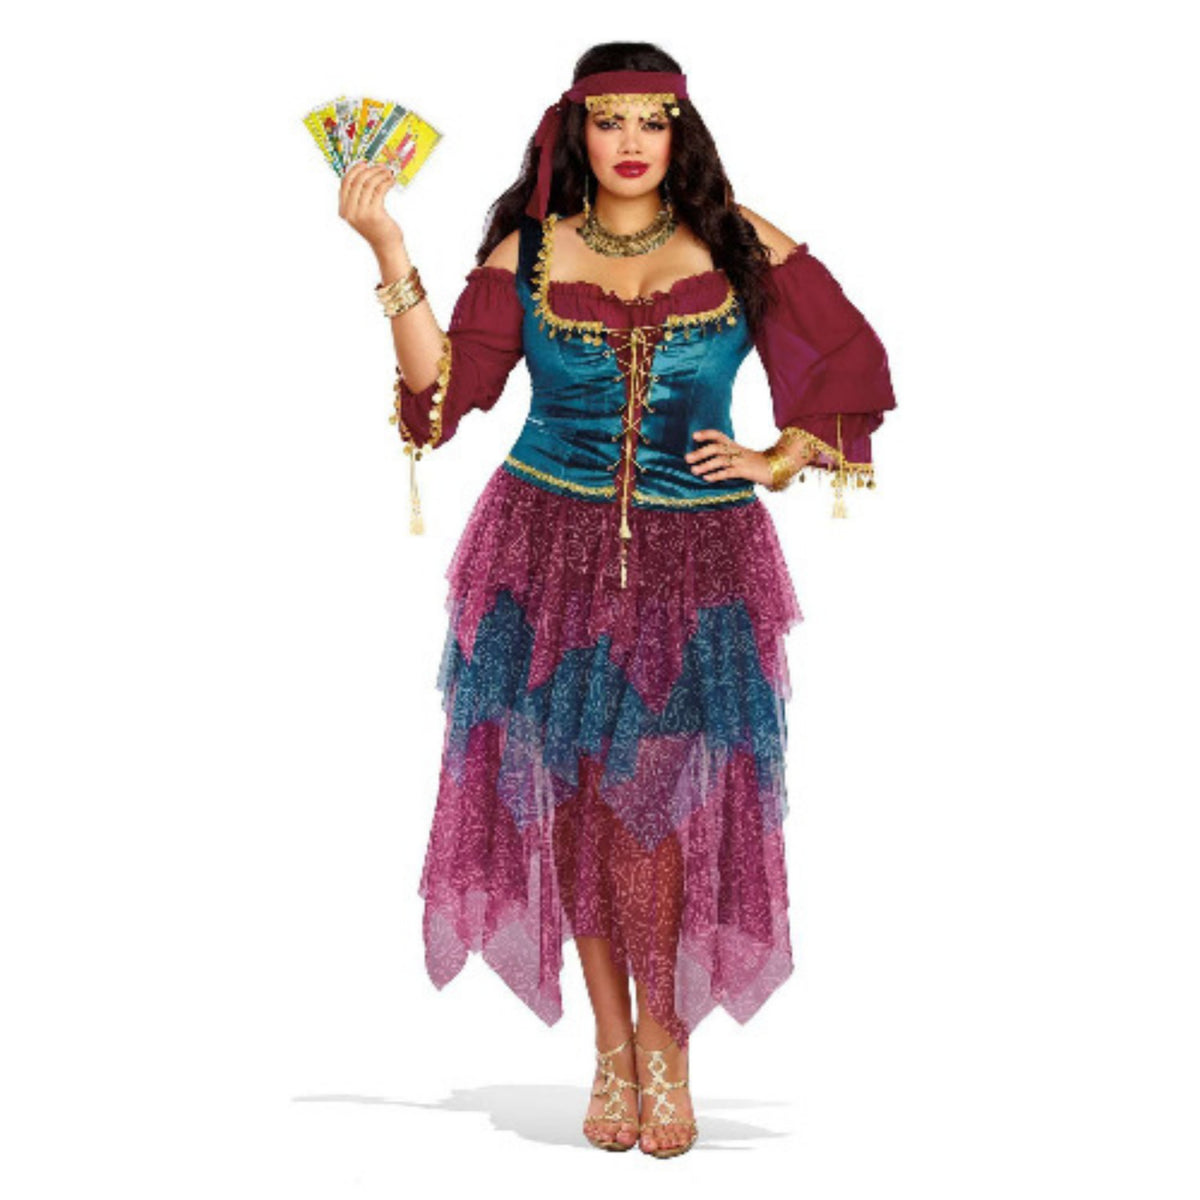 Bohemian Gypsy Fortune Teller Adult Costume